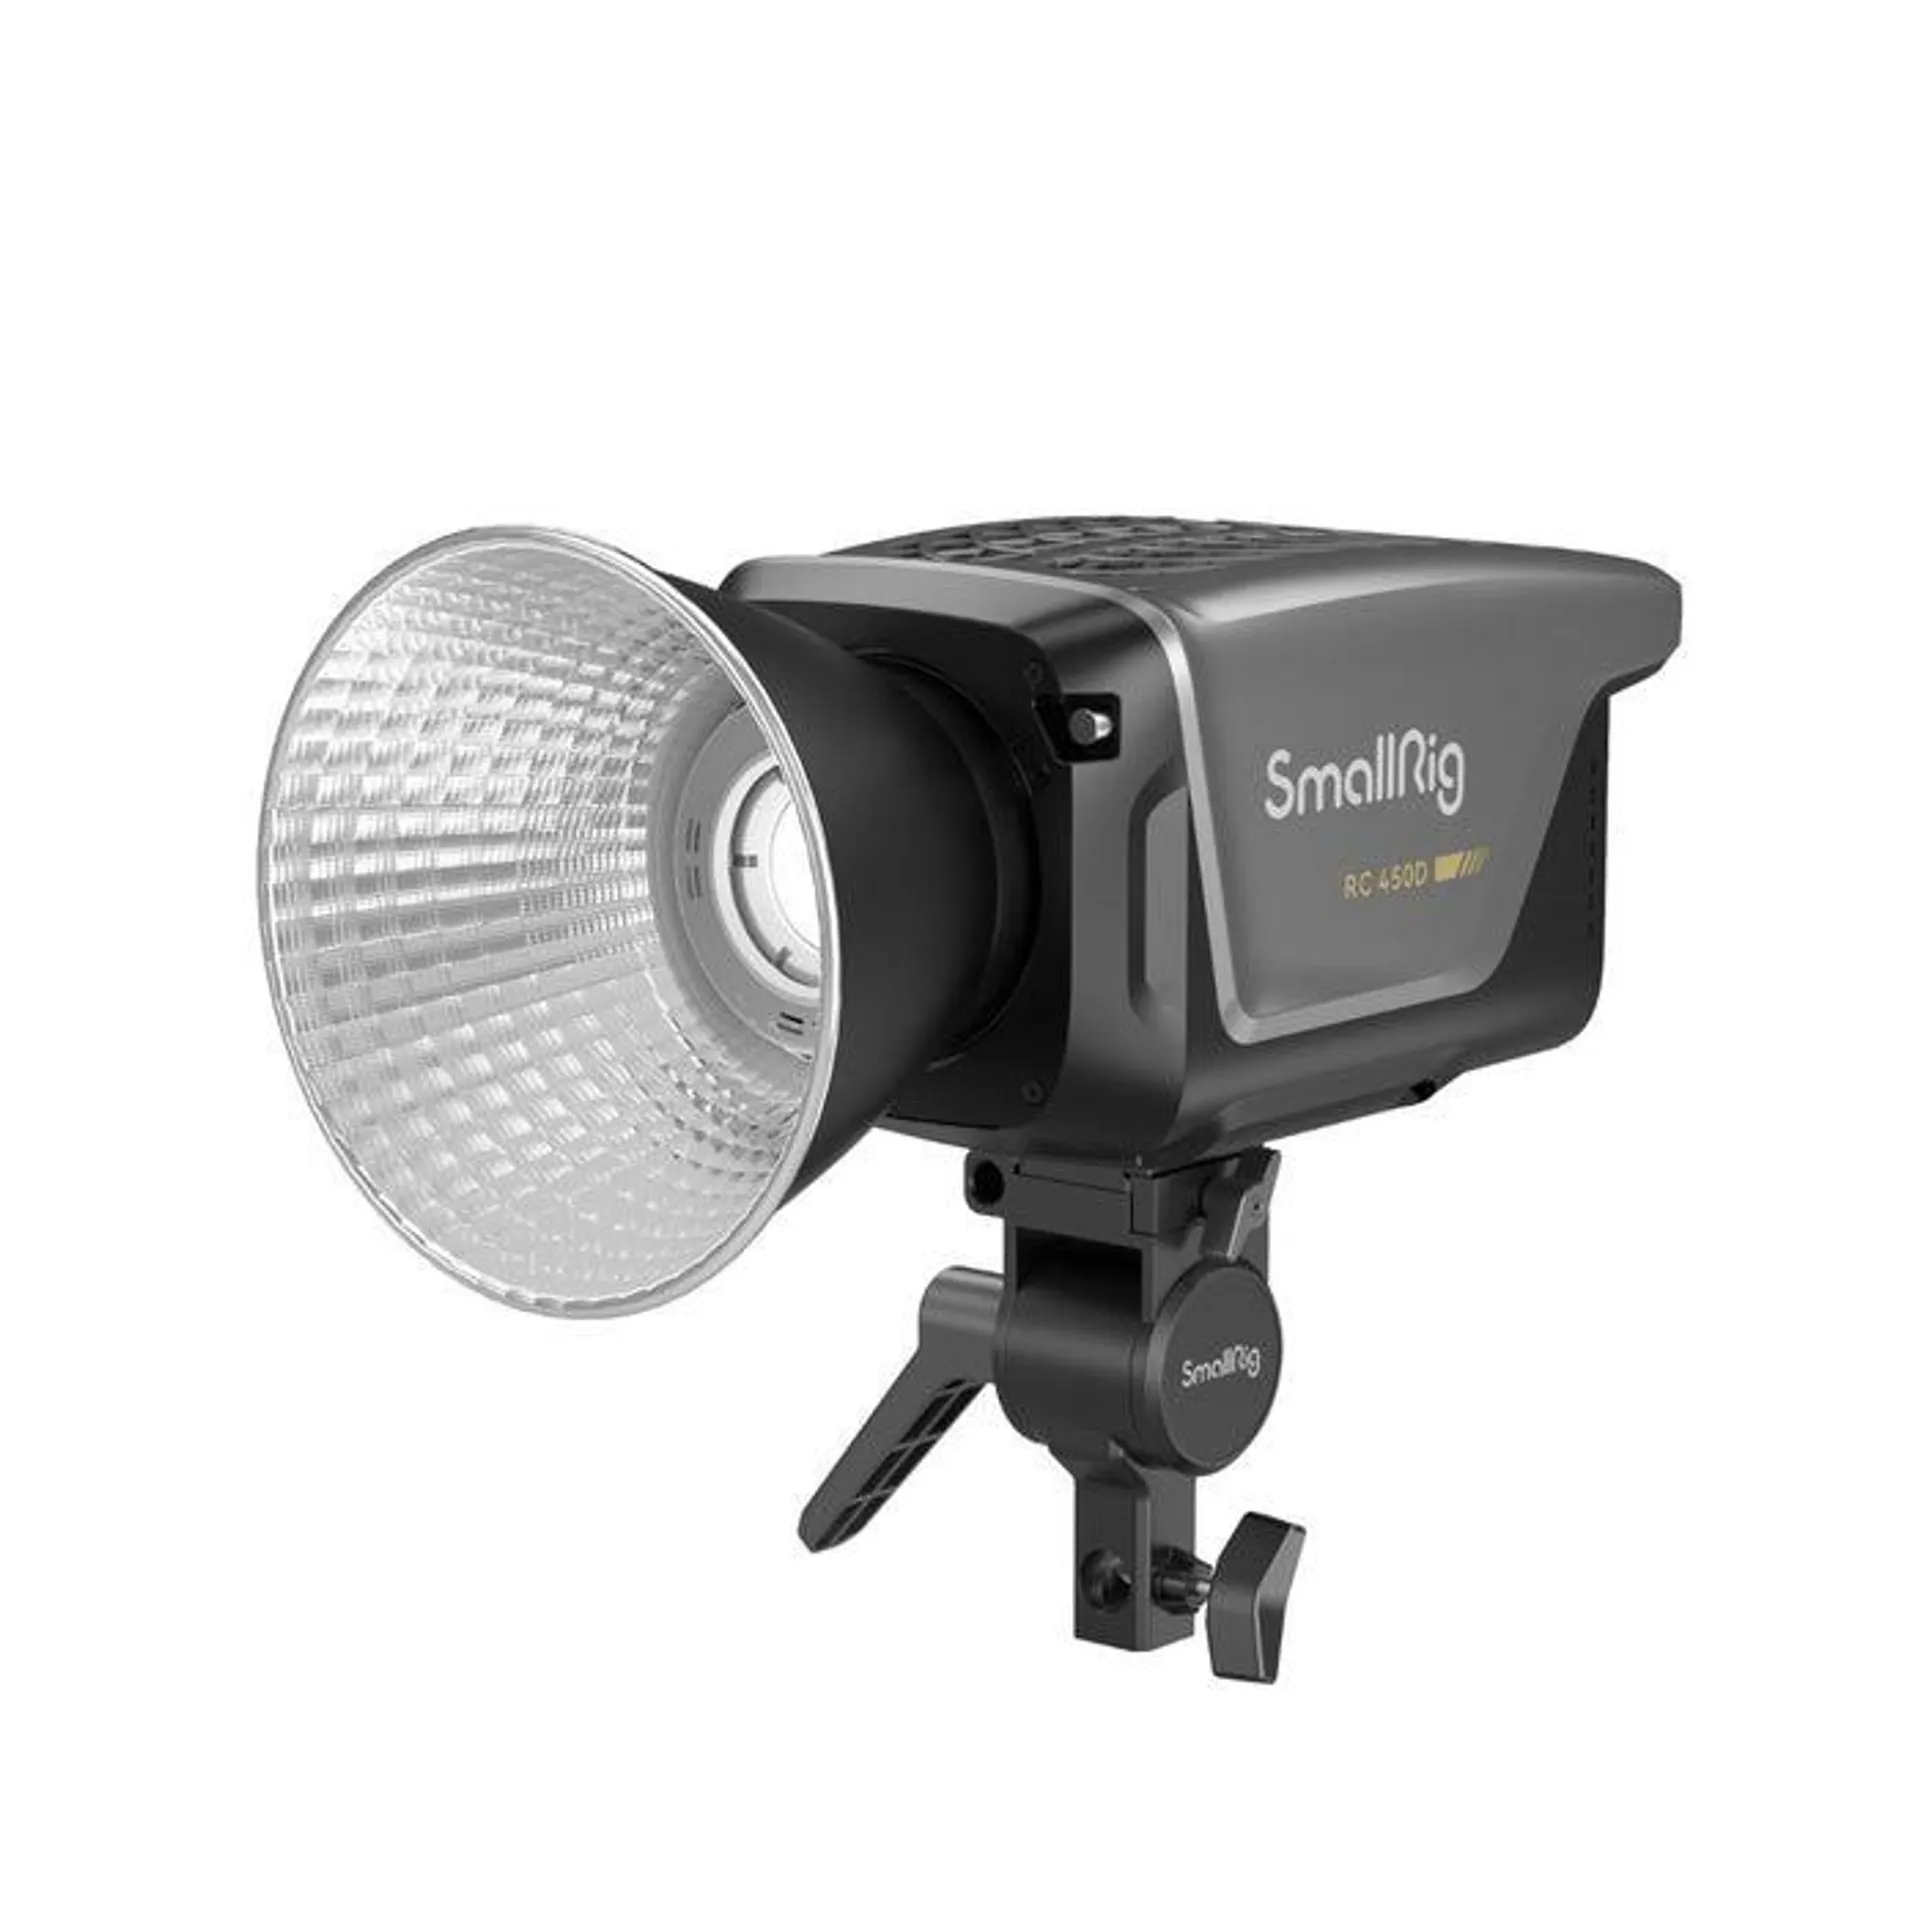 SmallRig RC 450D COB Daylight LED Video Light